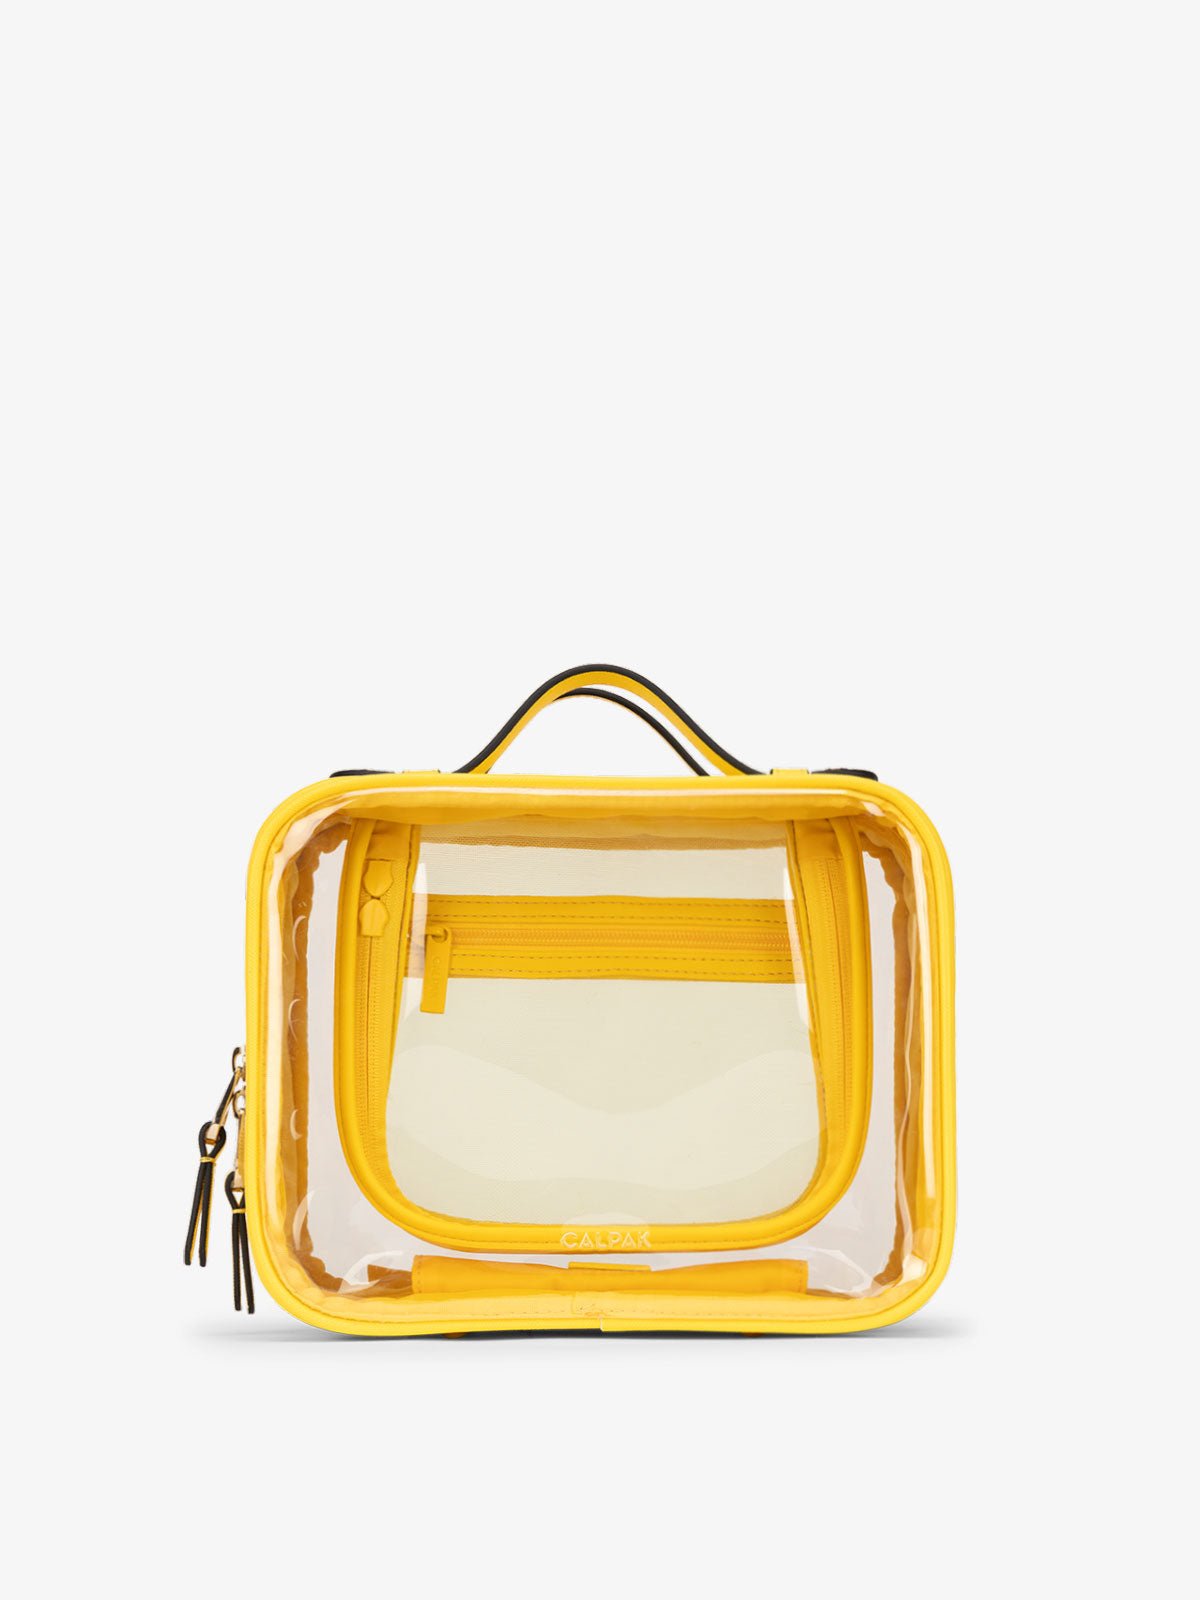 CALPAK Medium clear makeup bag with compartments in lemon yellow